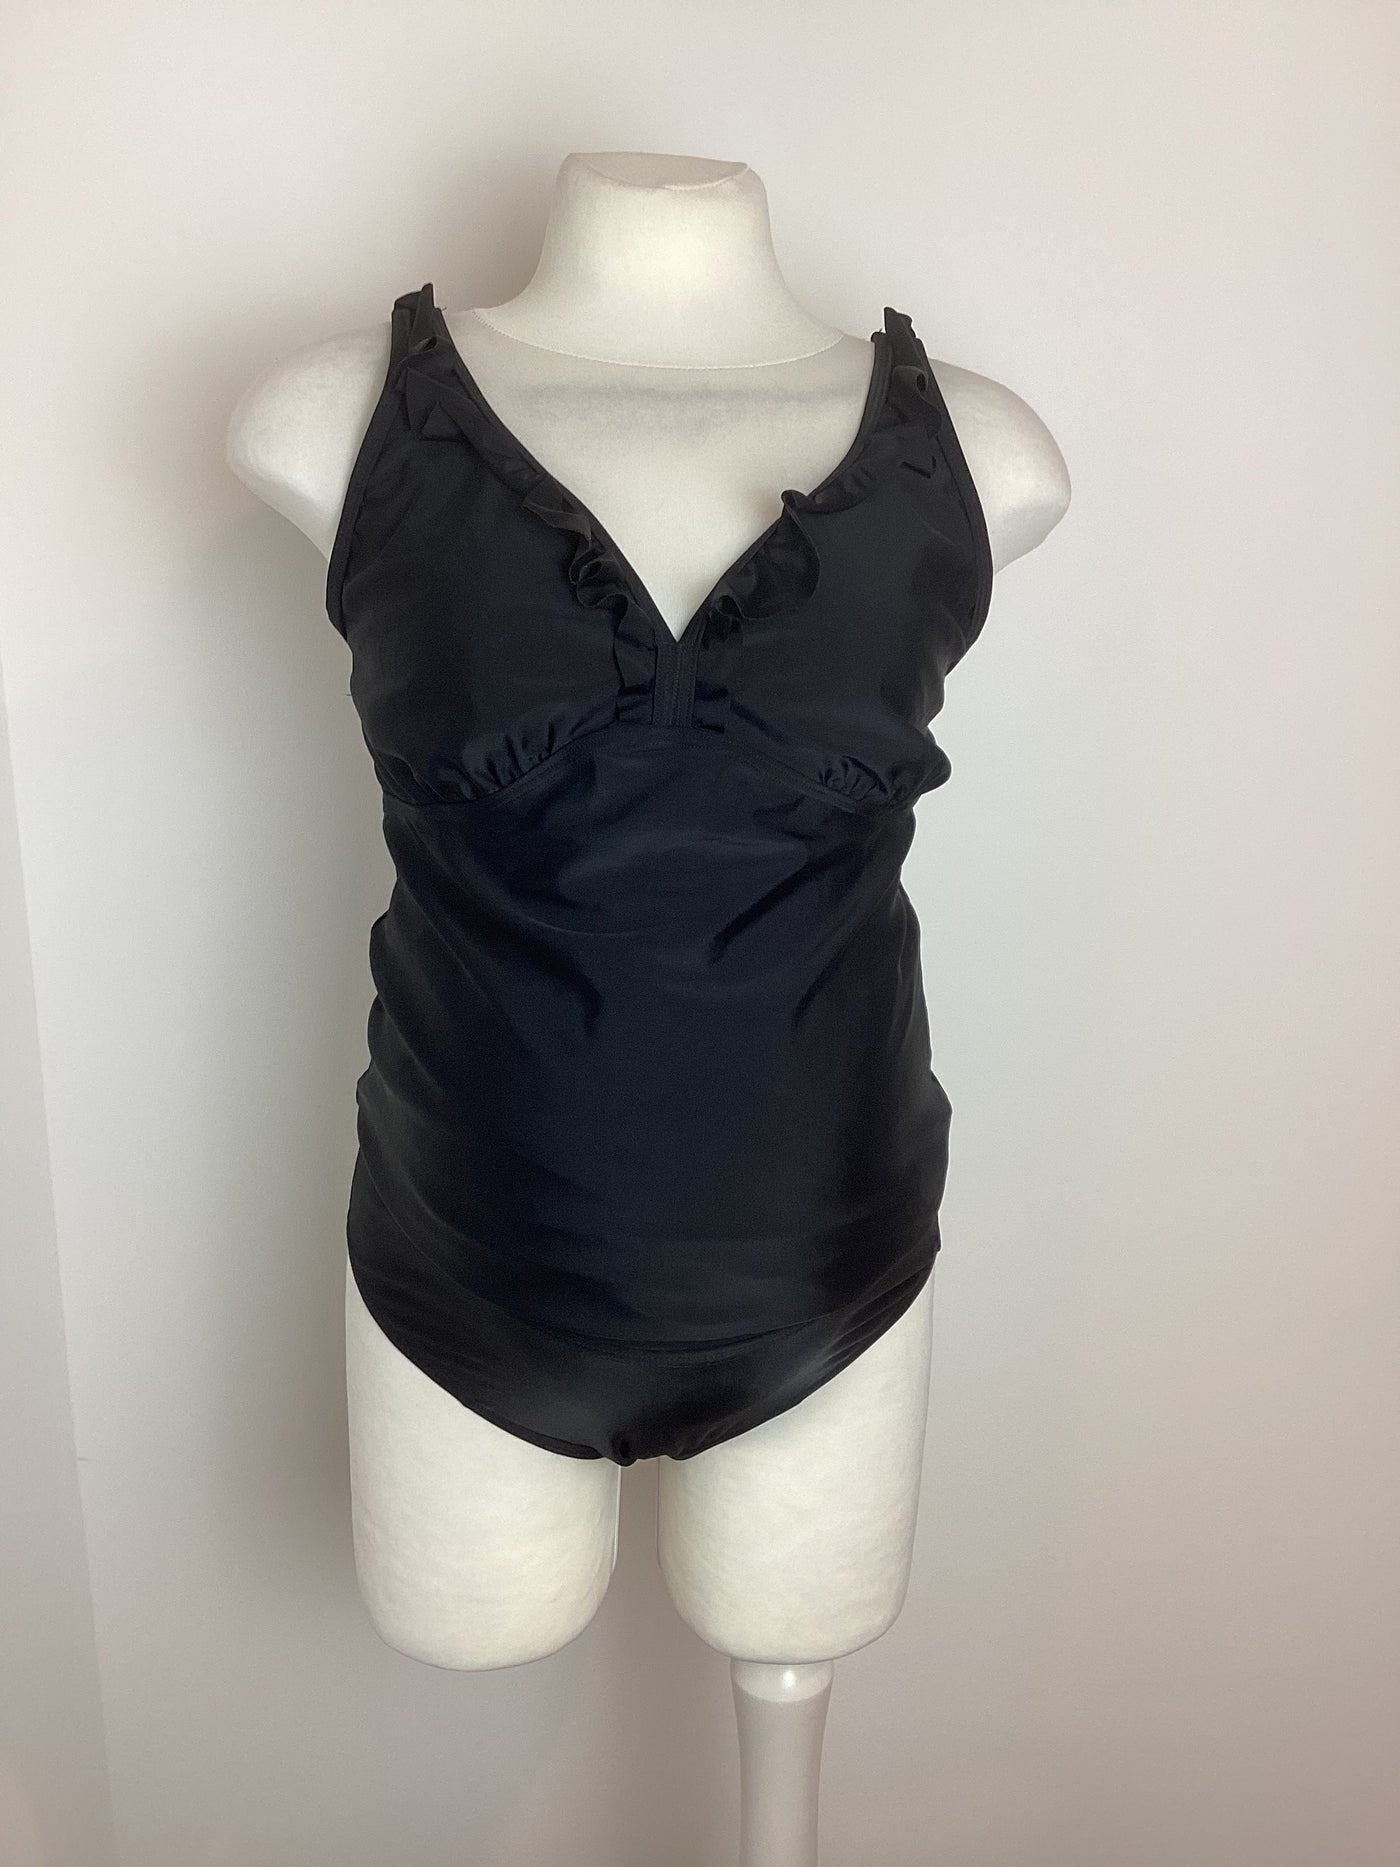 Jojo Maman Bebe black 2 piece swimming costume - Size M (Approx UK 10/12)